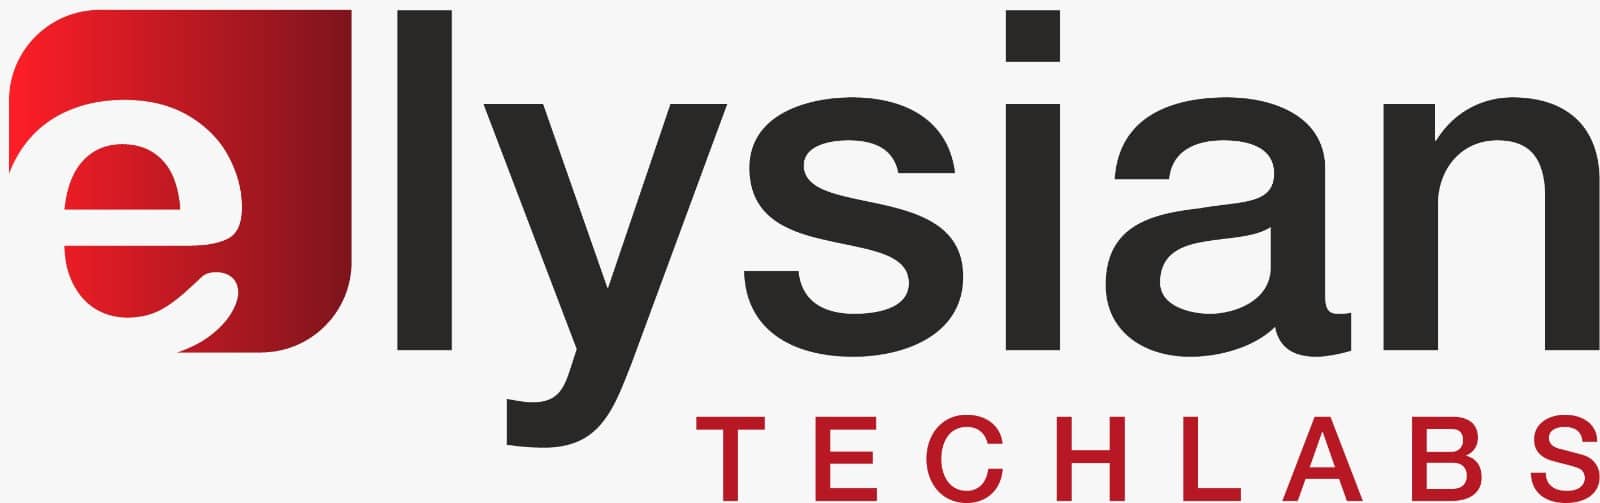 Elysian Techlabs